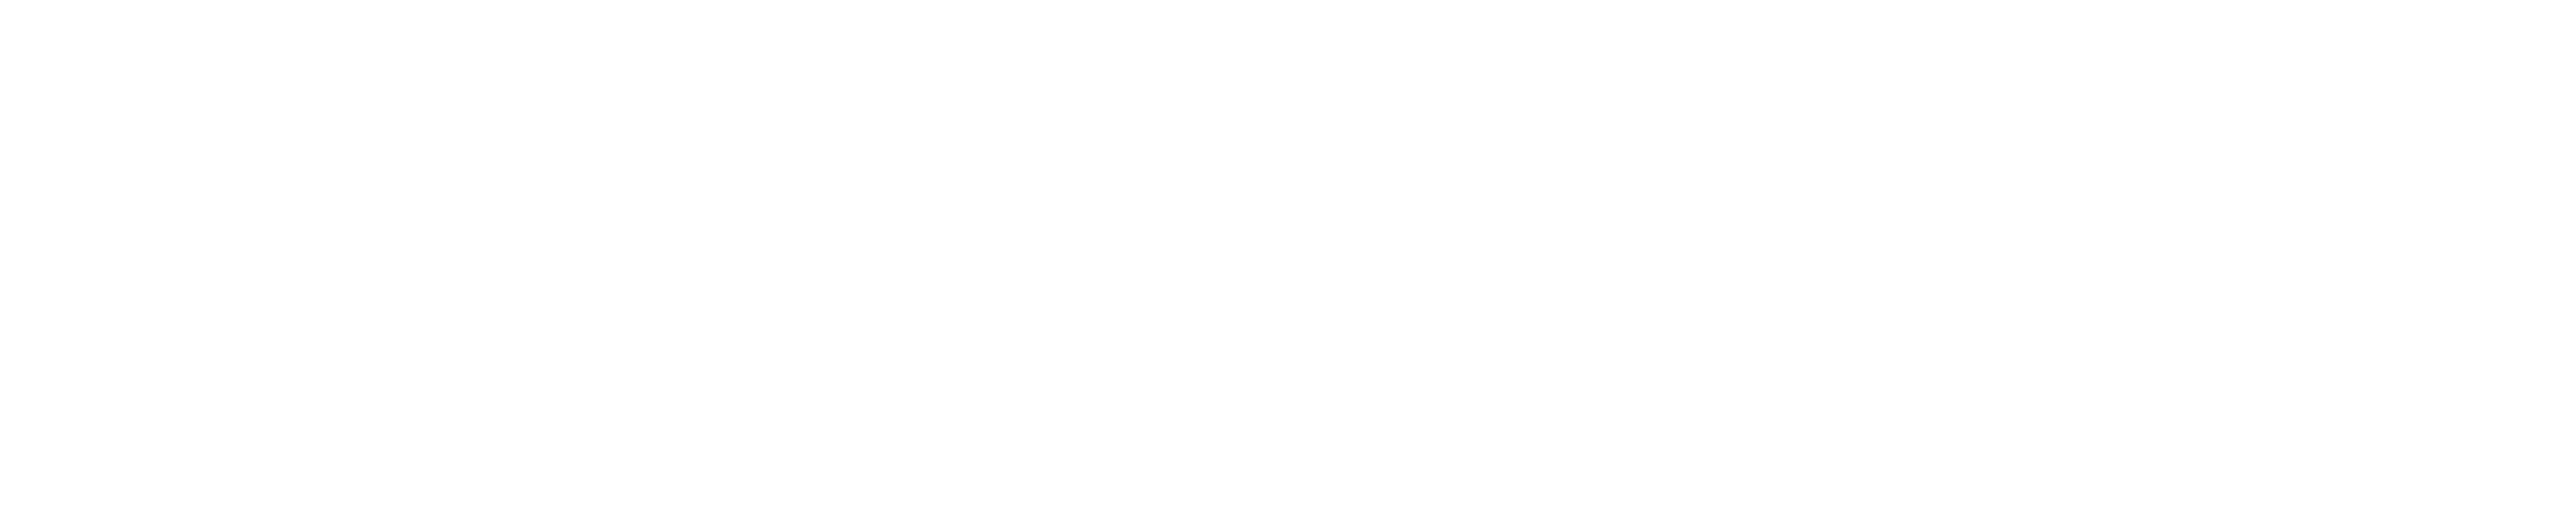 template_logo